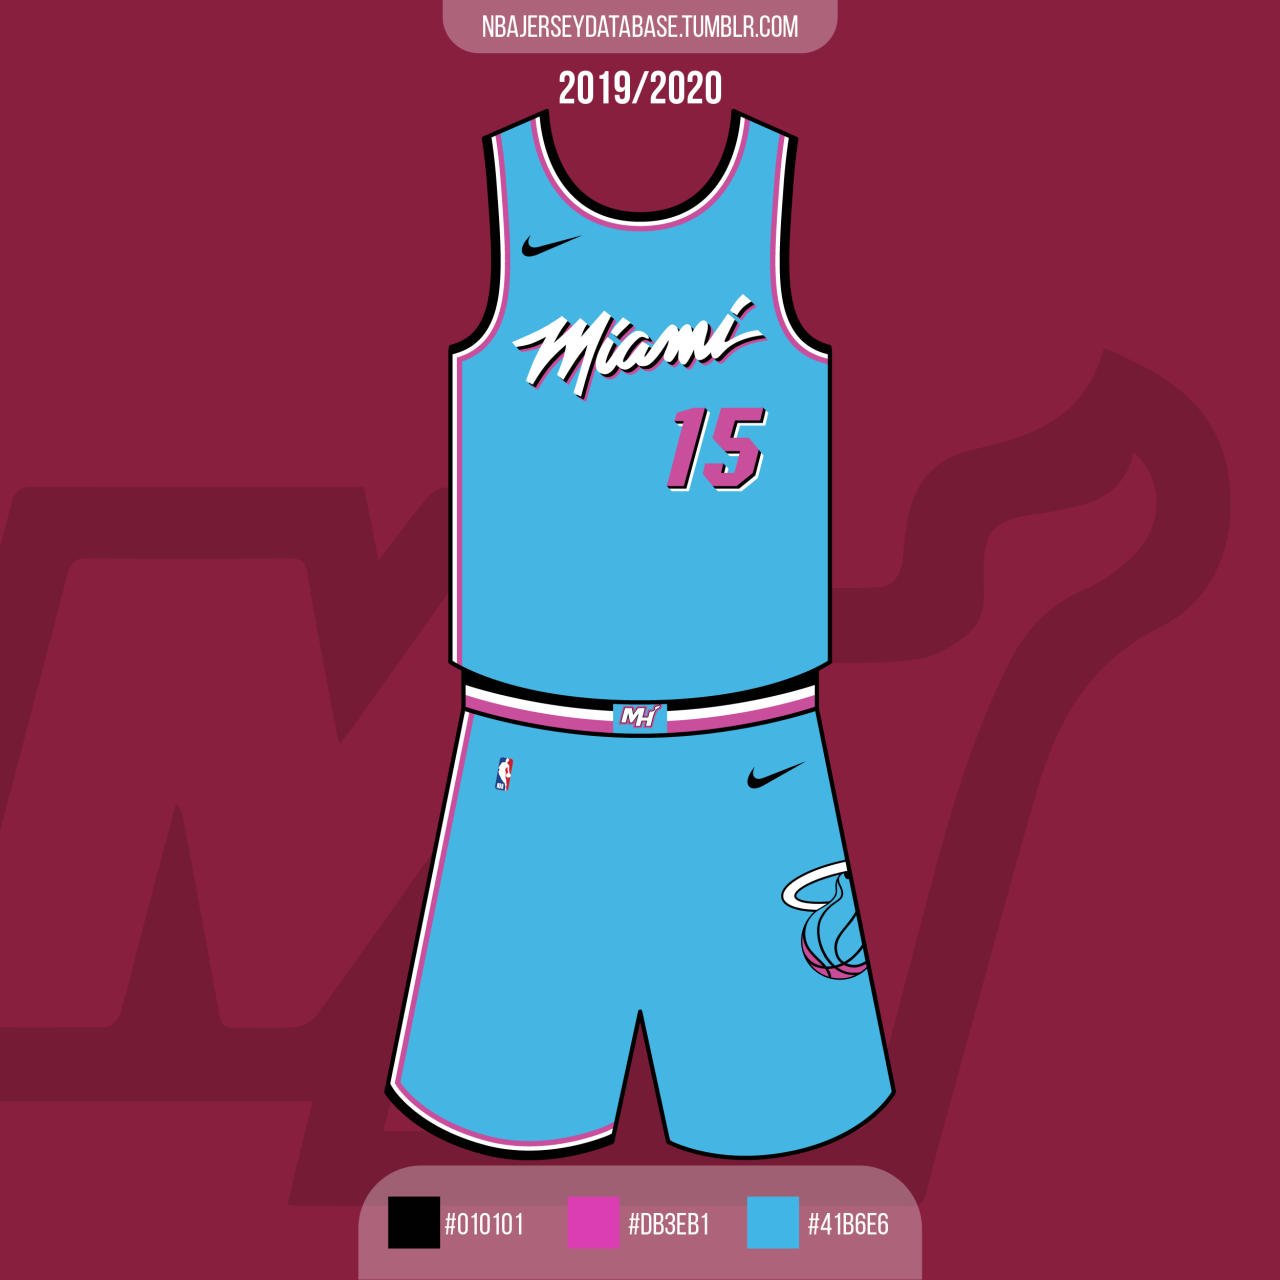 ESPN - First look at the Miami Heat's new ViceVersa jerseys for the  2020-2021 NBA season 👀 (via NBA on ESPN)